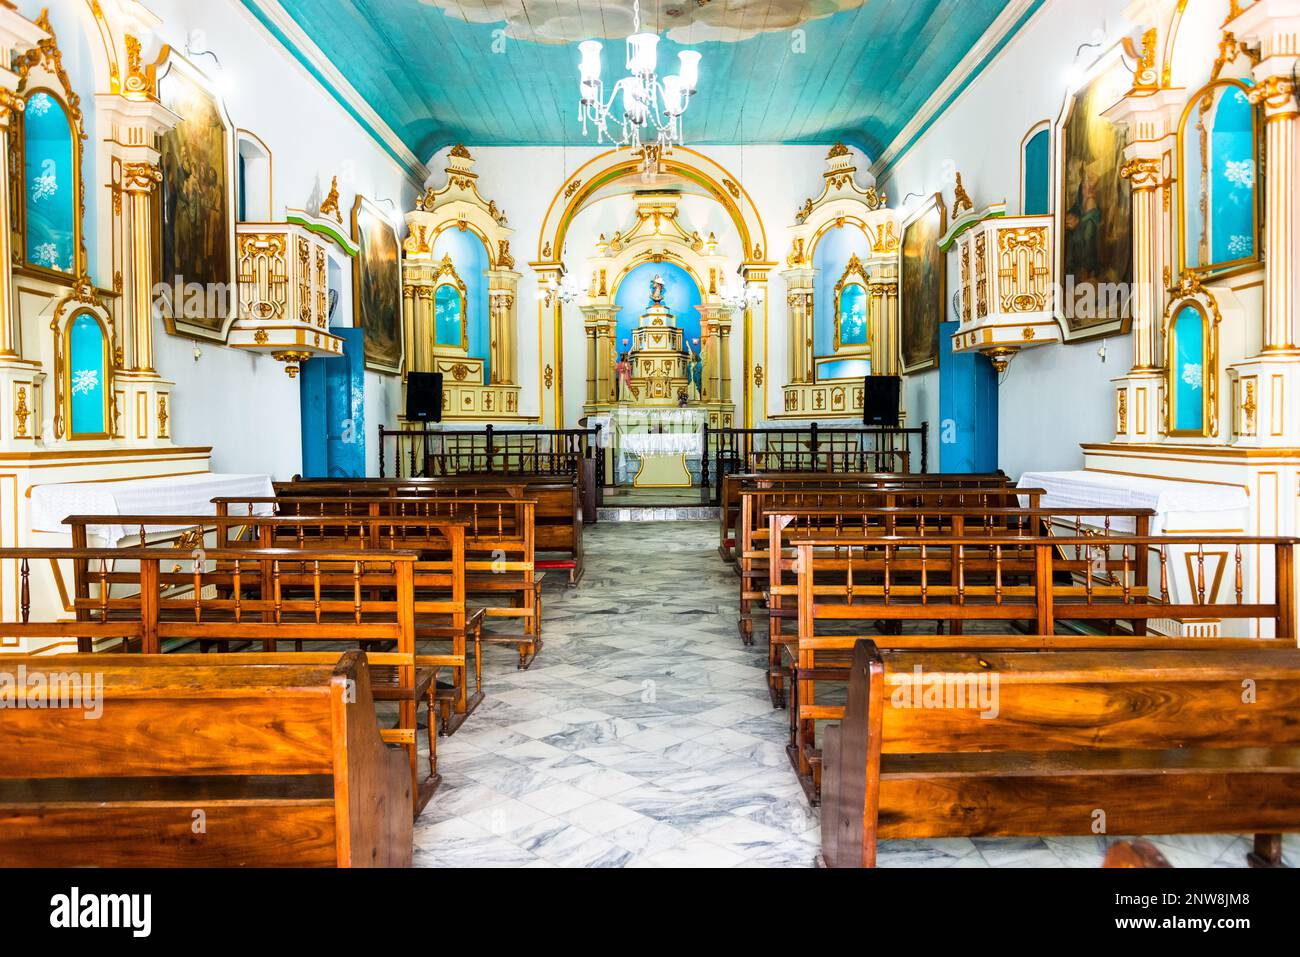 Valenca, Bahia, Brazil - September 10, 2022: Internal view of the church of Nossa Senhora do Amparo in the city of Valenca, Bahia. Stock Photo